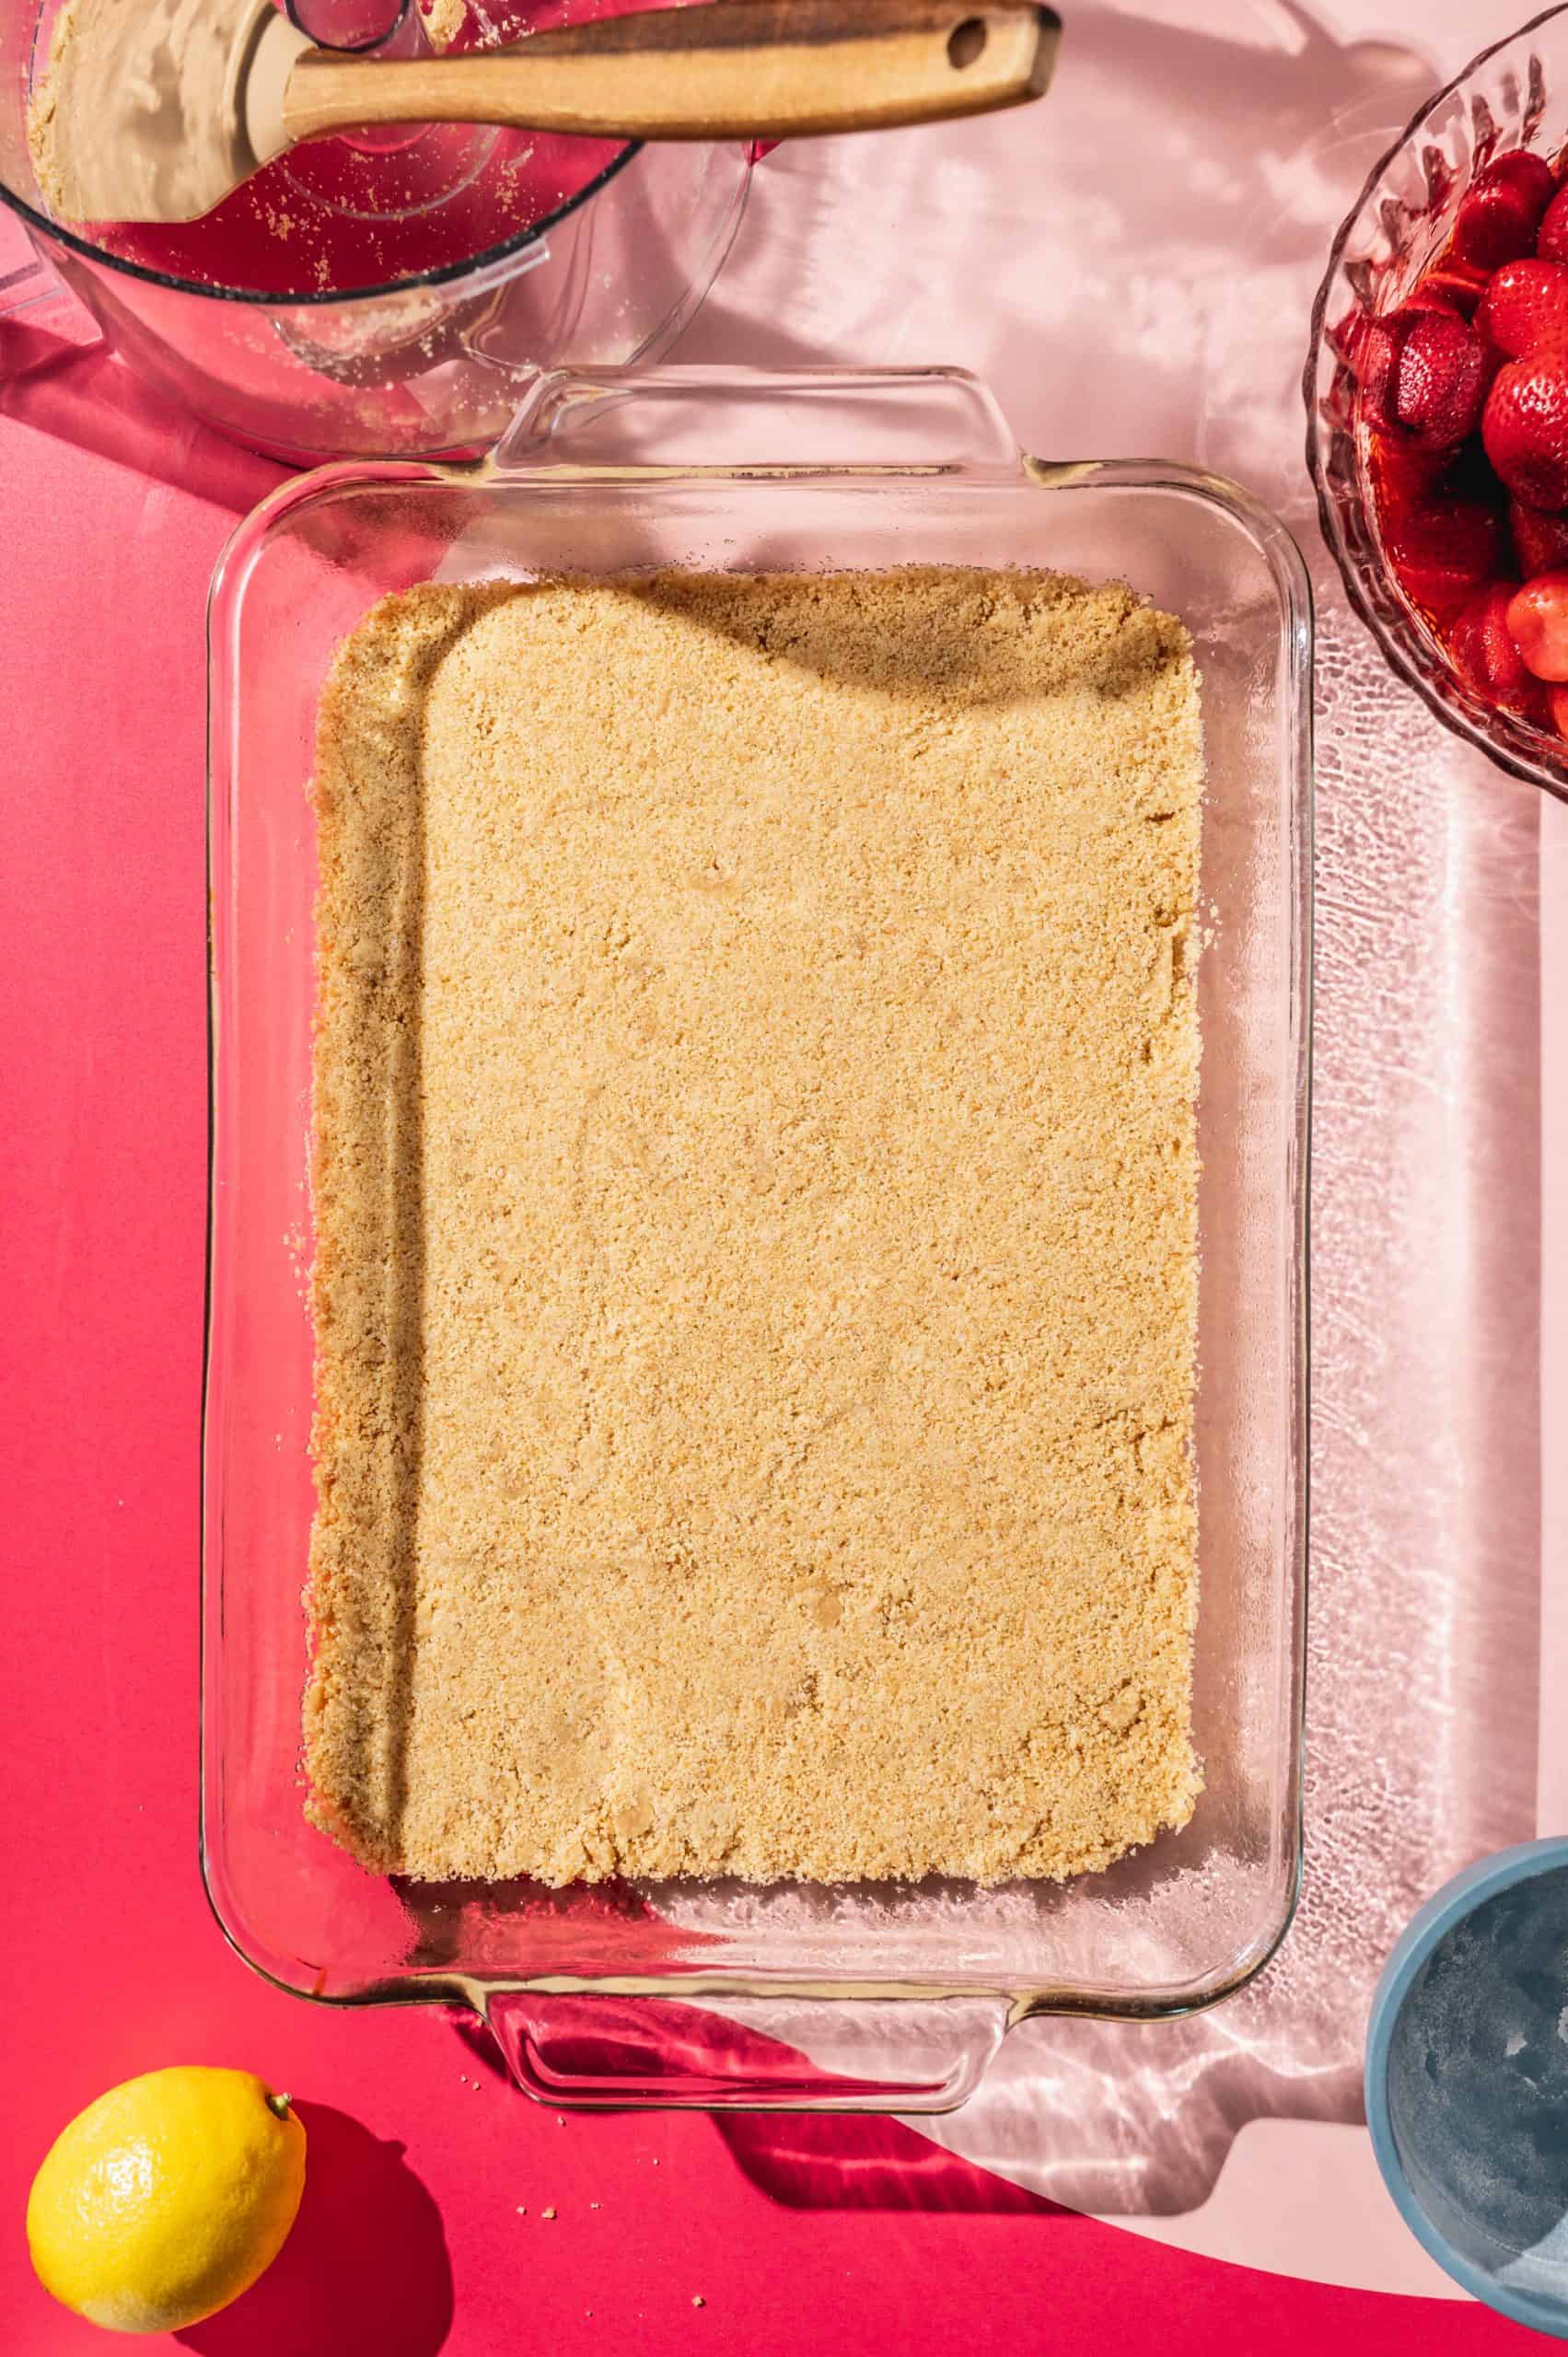 graham cracker crust pressed into a rectangular glass baking dish